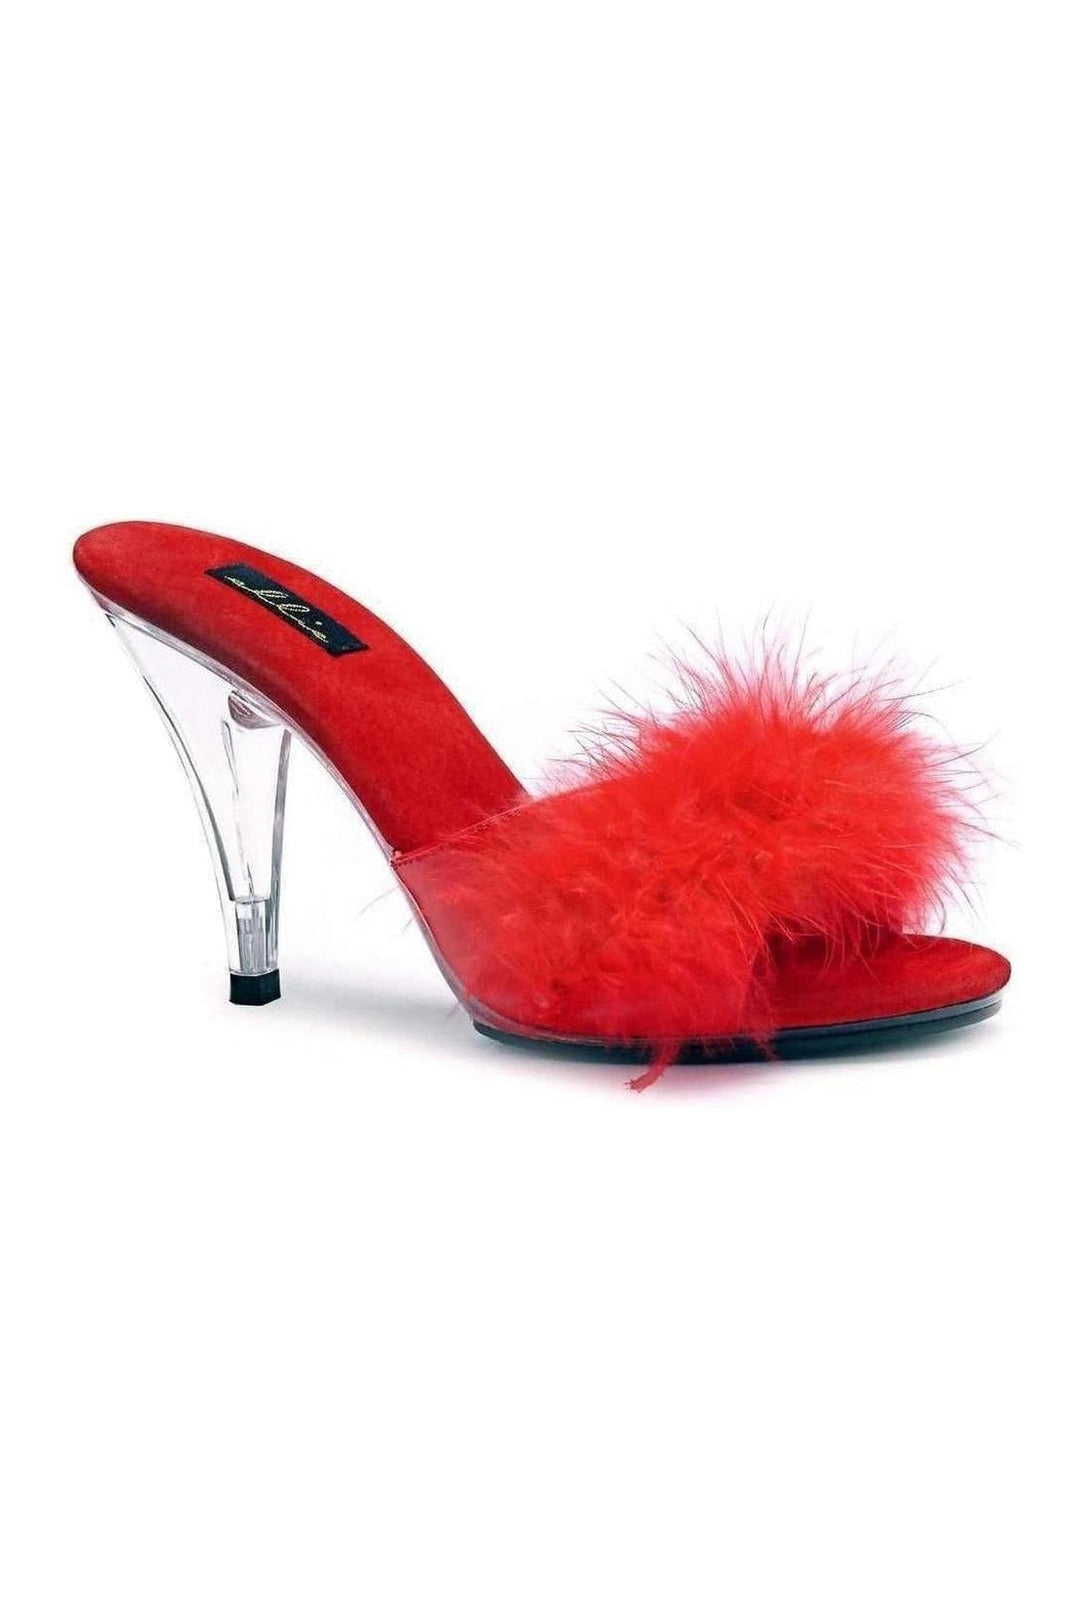 405-SASHA Marabou | Red Patent-Ellie Shoes-Red-Marabous-SEXYSHOES.COM